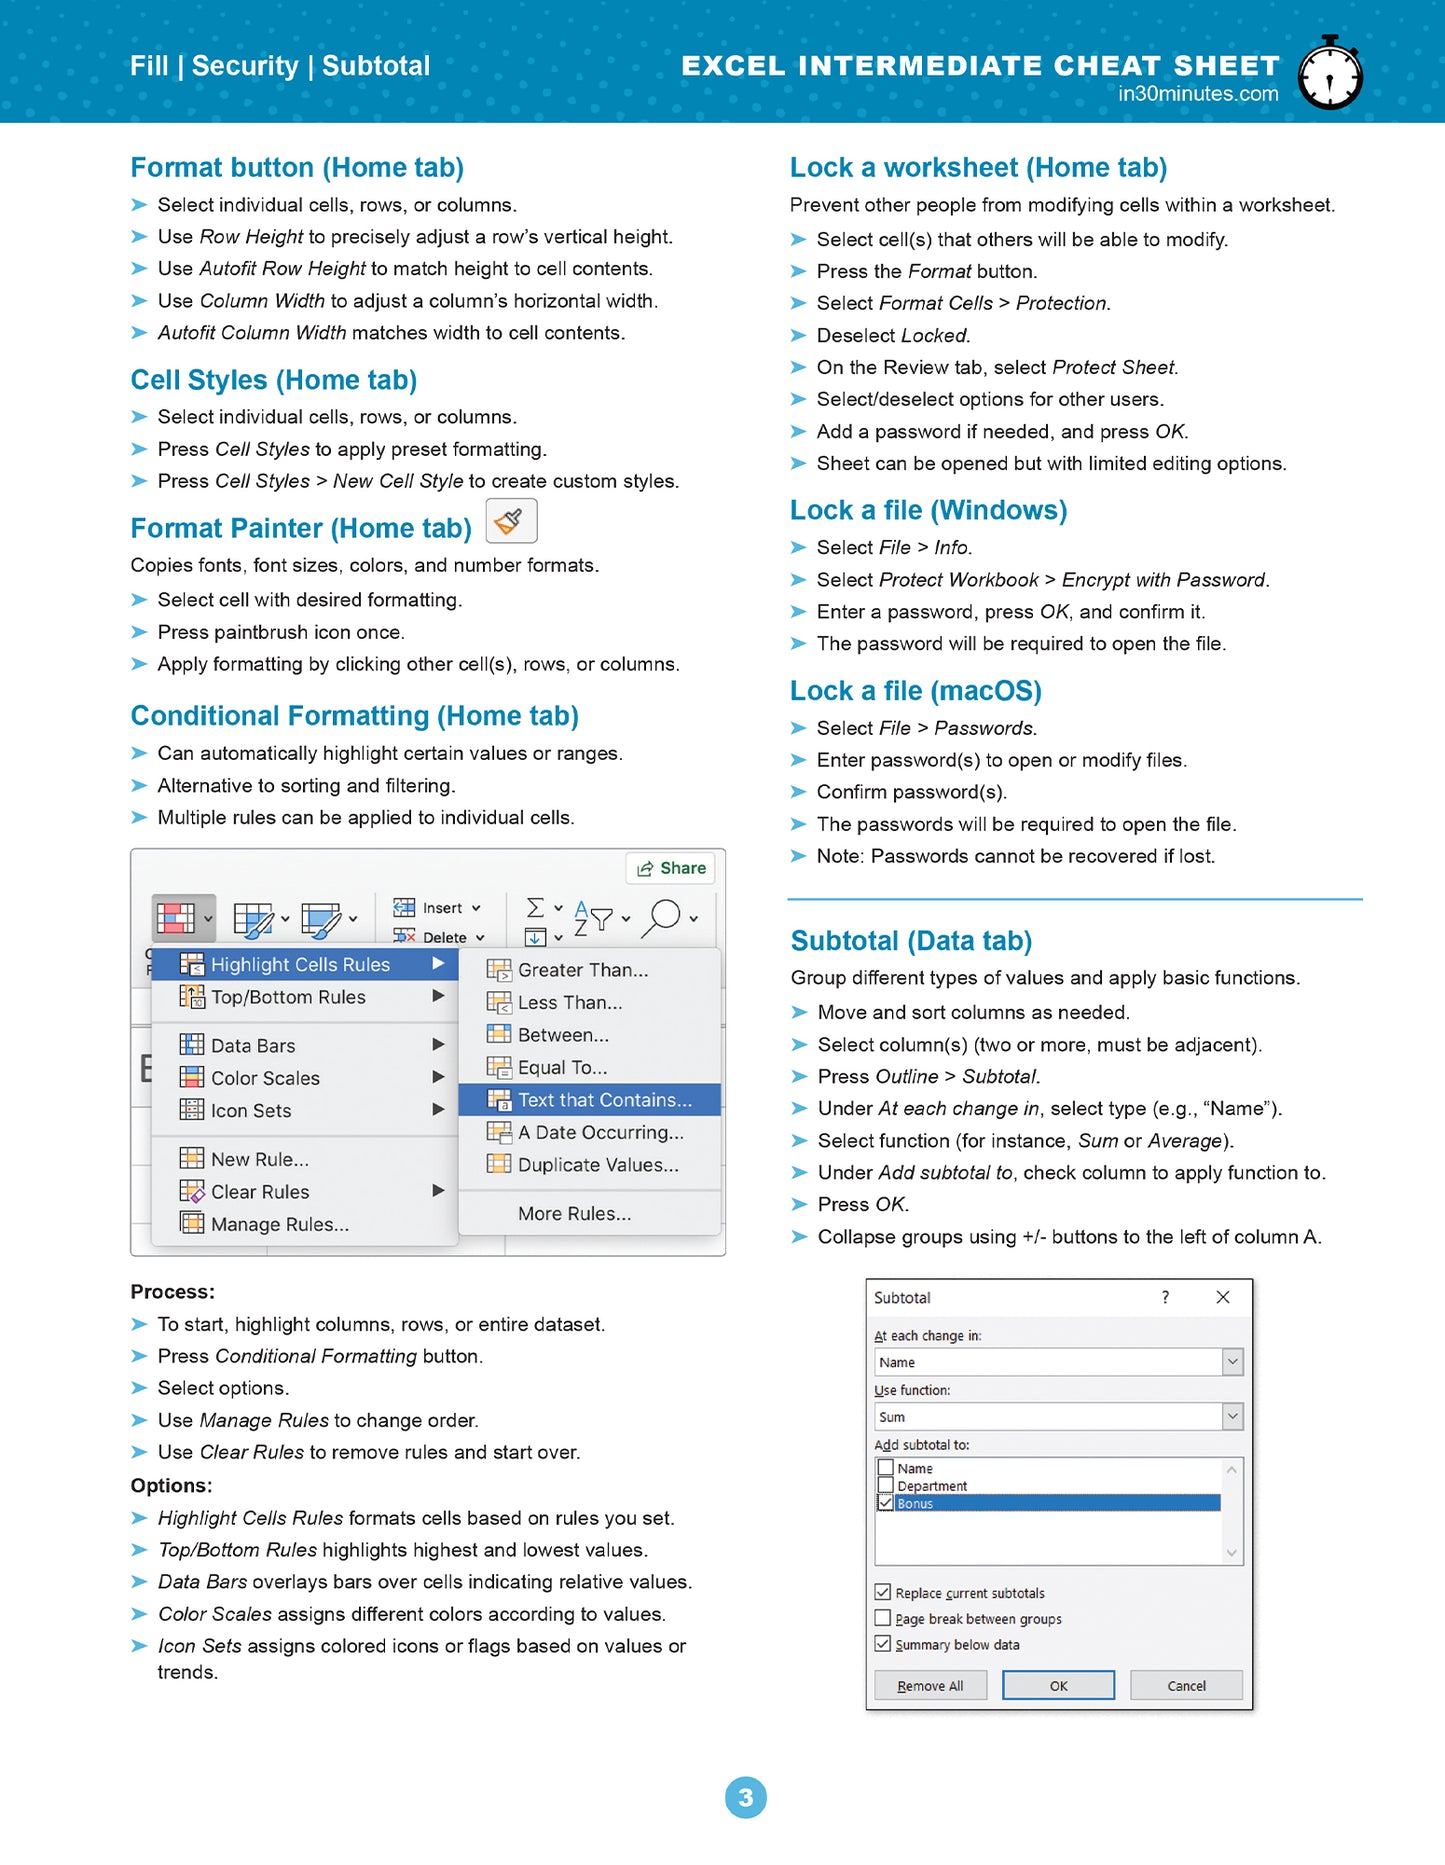 Excel INTERMEDIATE Cheat Sheet for Microsoft 365